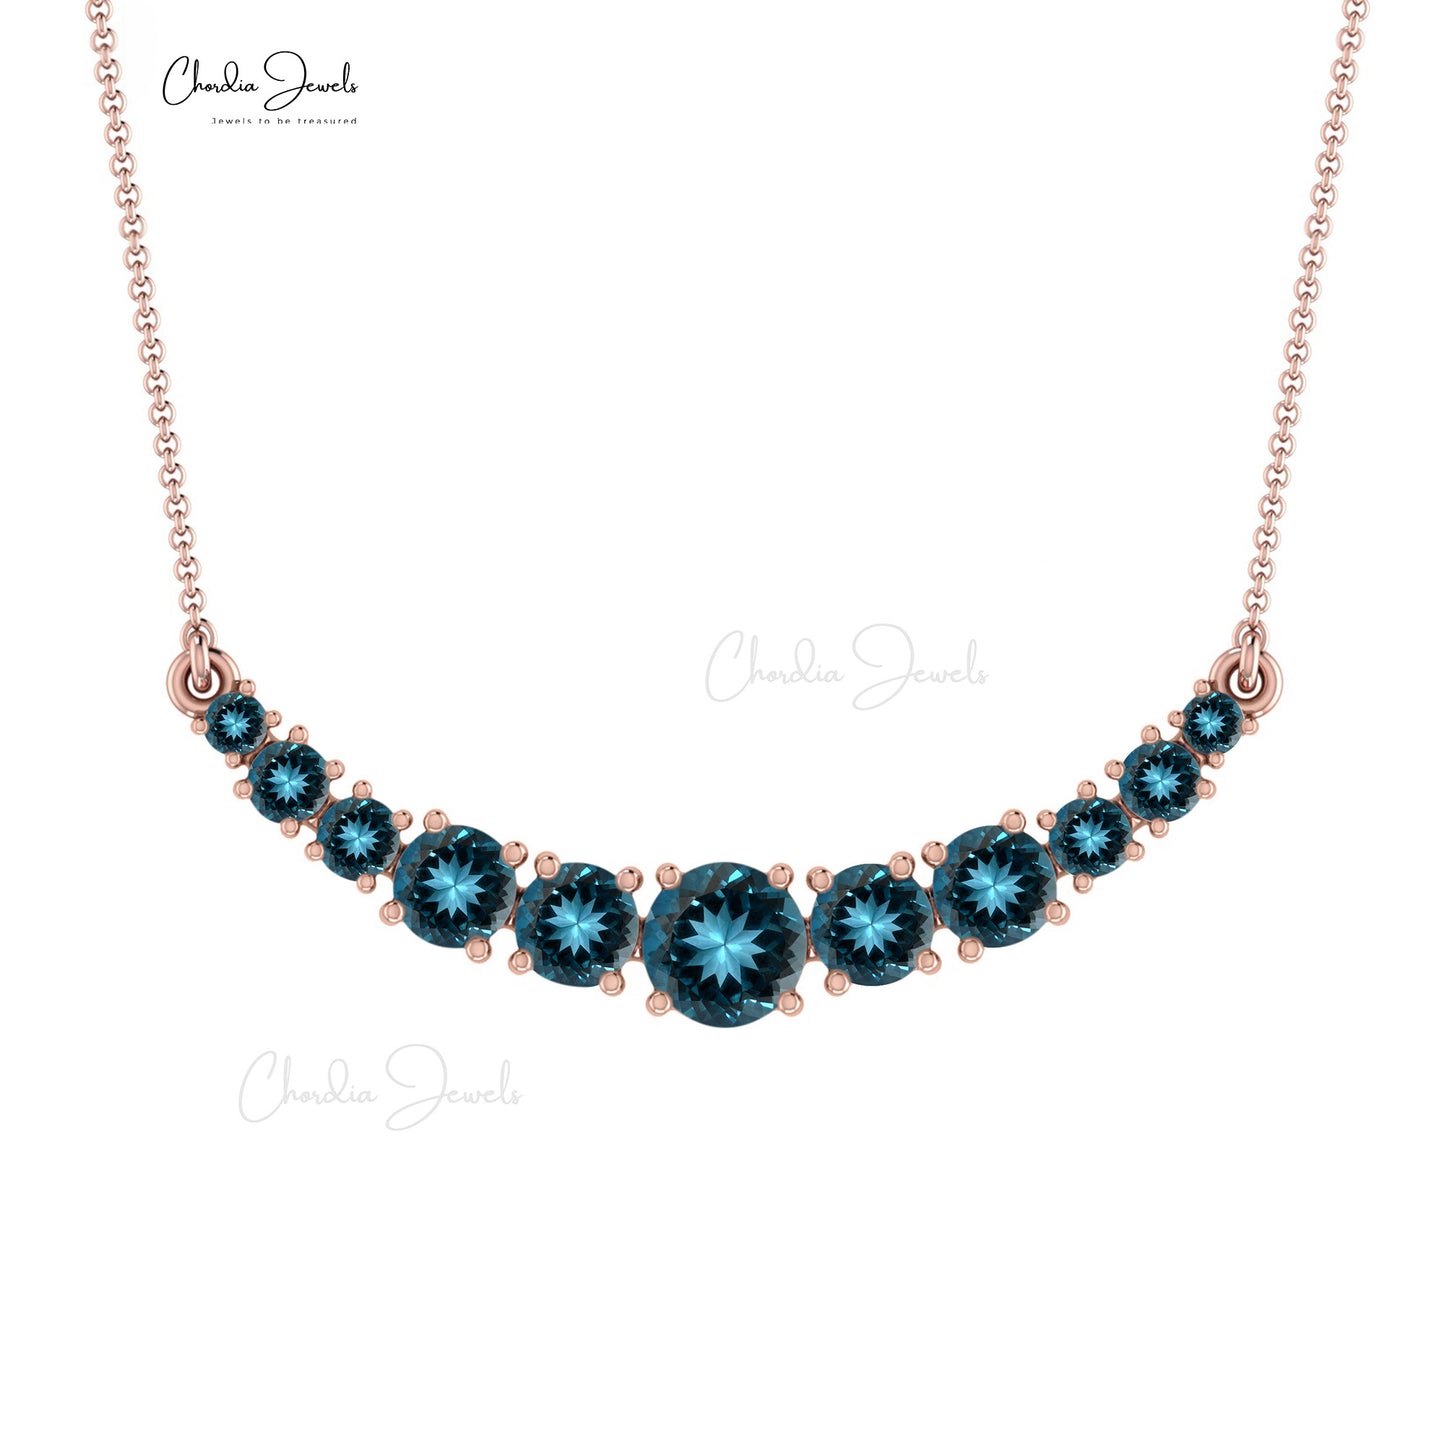 Natural London Blue Topaz Necklace, December Birthstone Necklace, 1.19 Carat Round Faceted Gemstone Necklace, Wedding Gift for Her